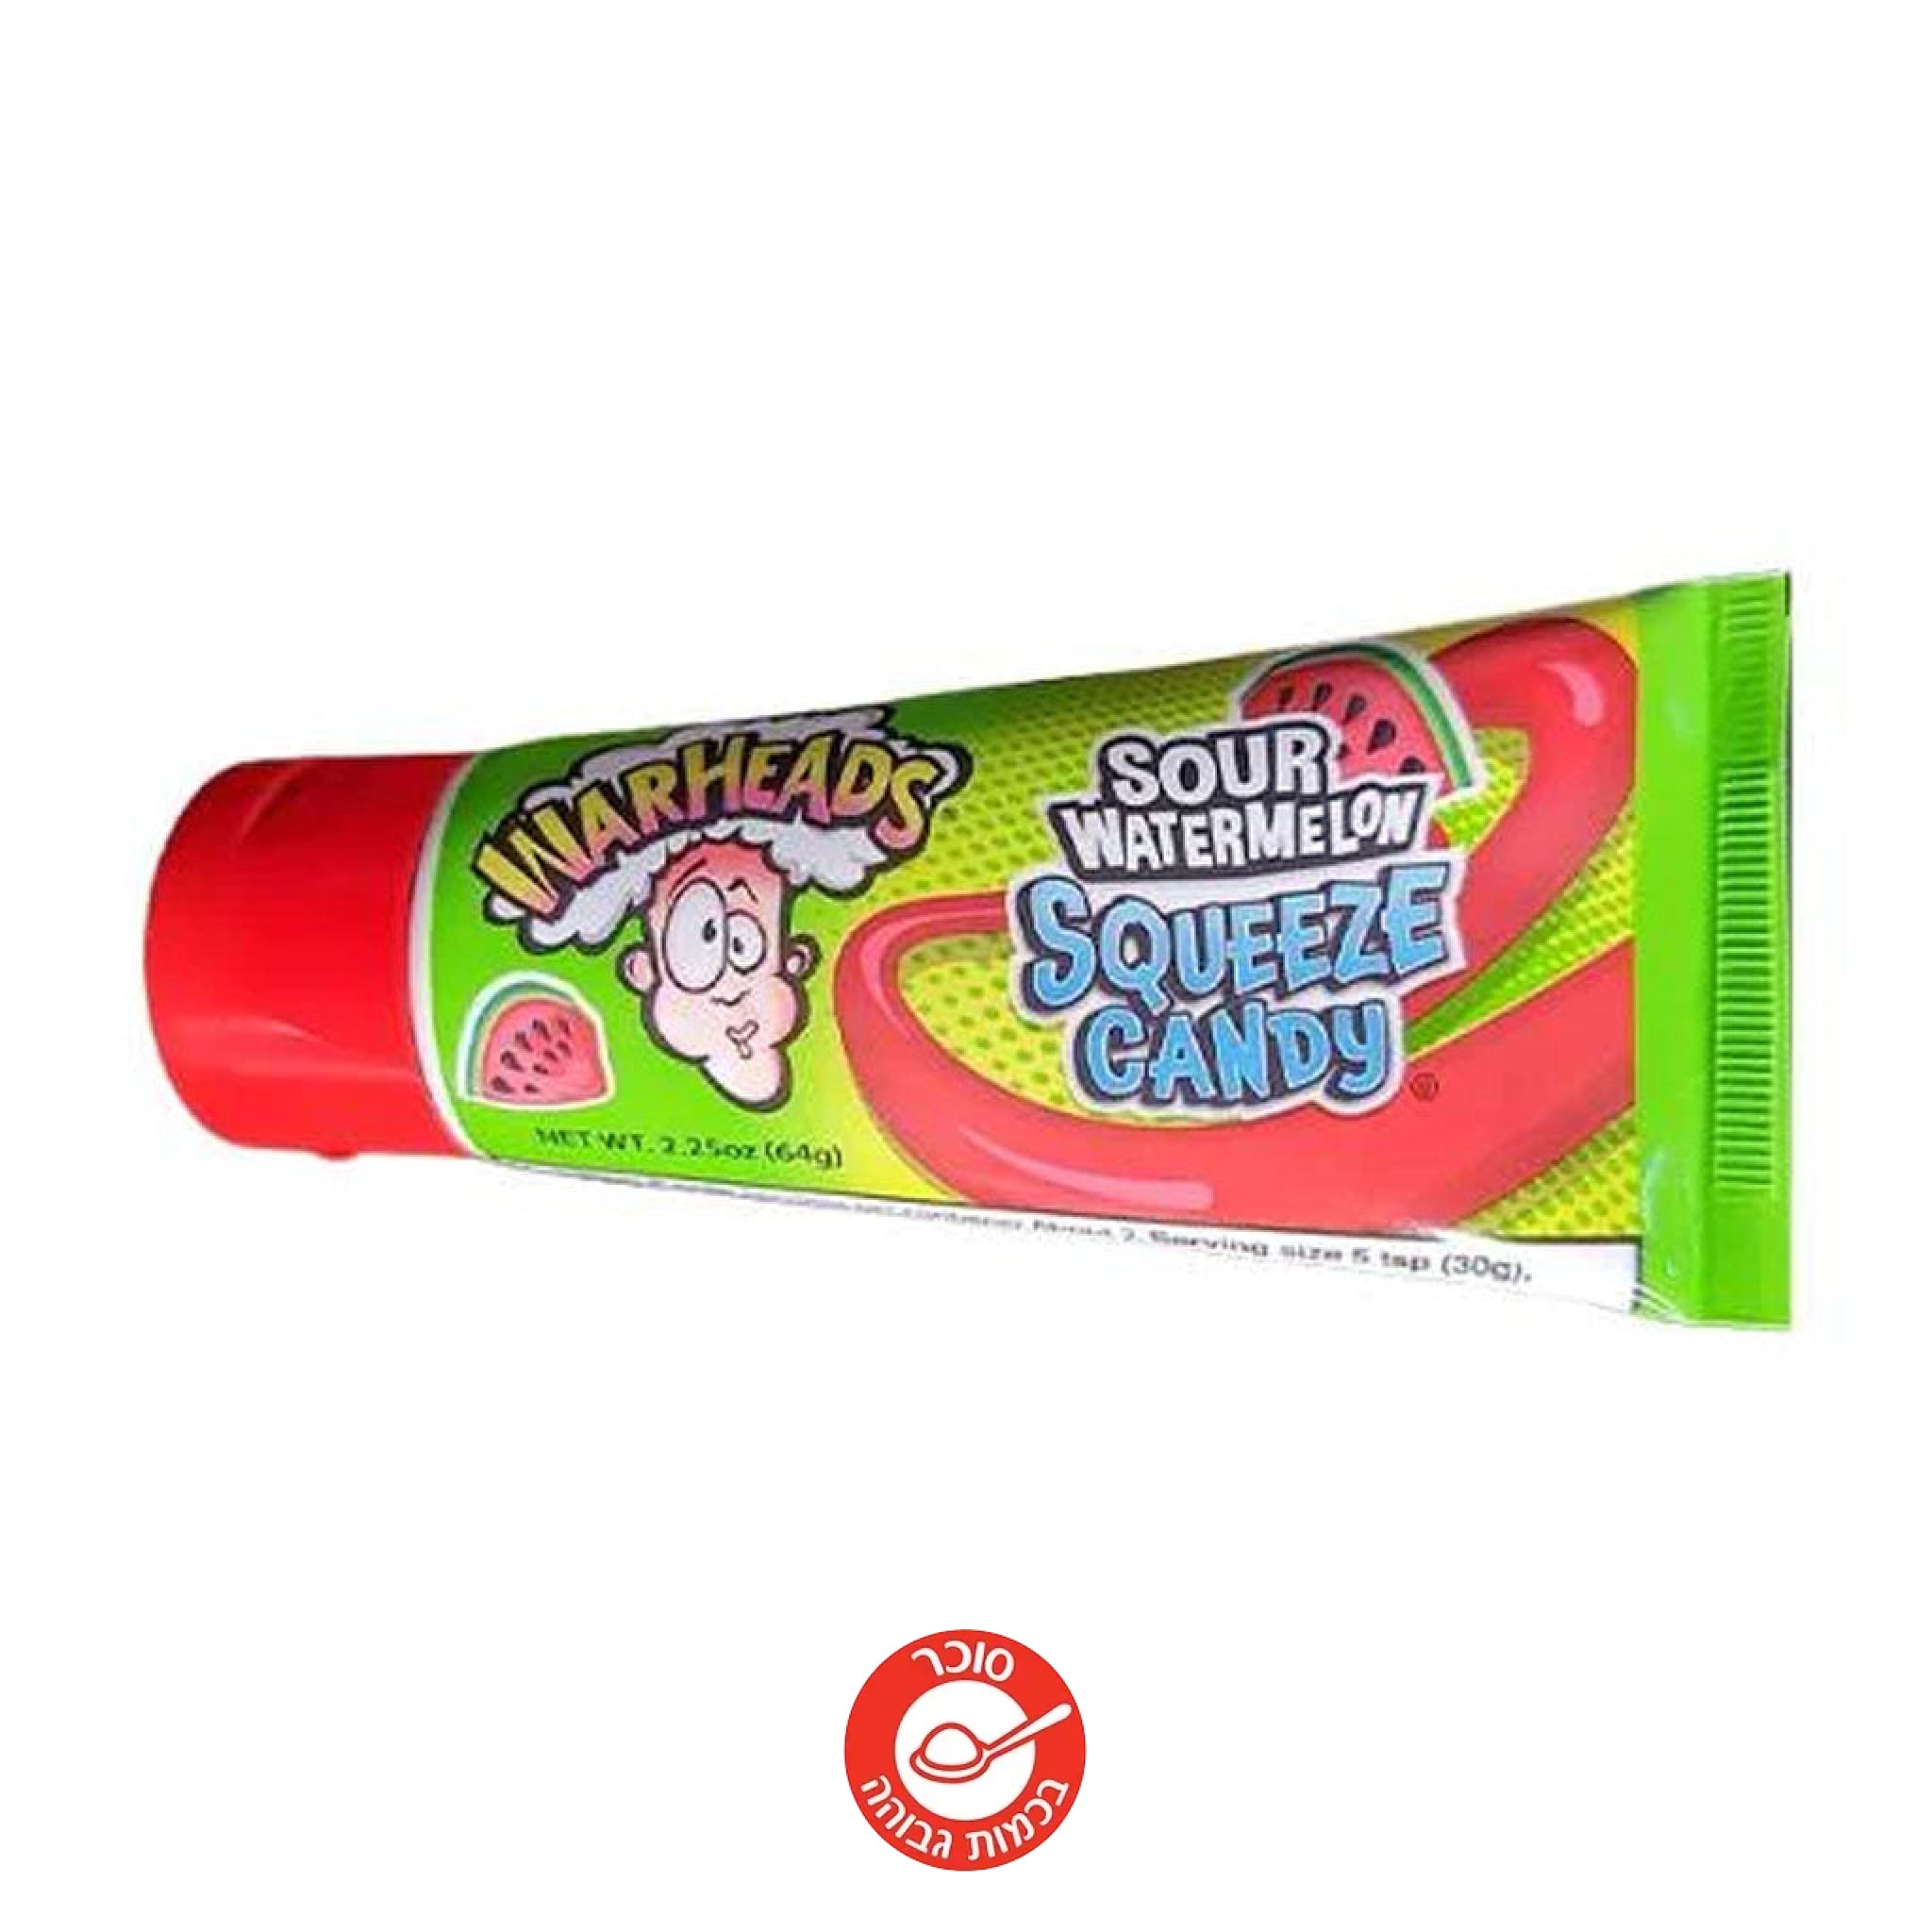 Warheads Squeezer Candy ווראהדס אבטיח חמוץ בשפורפרת סוכריות